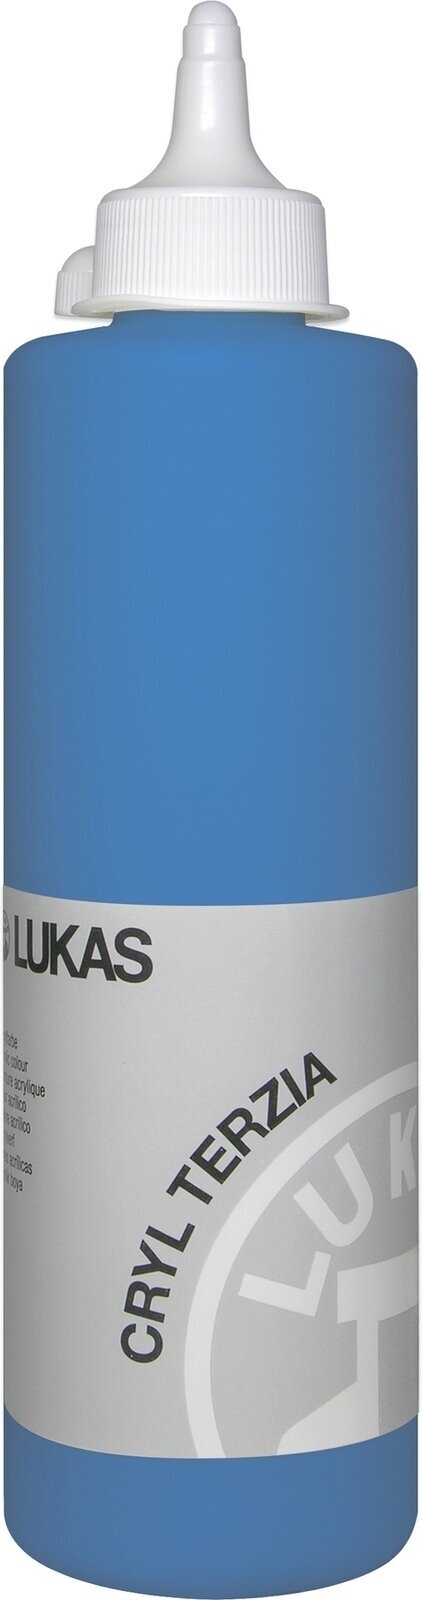 Acrylfarbe Lukas Cryl Terzia Acrylic Paint Plastic Bottle Acrylfarbe Primary Blue 500 ml 1 Stck